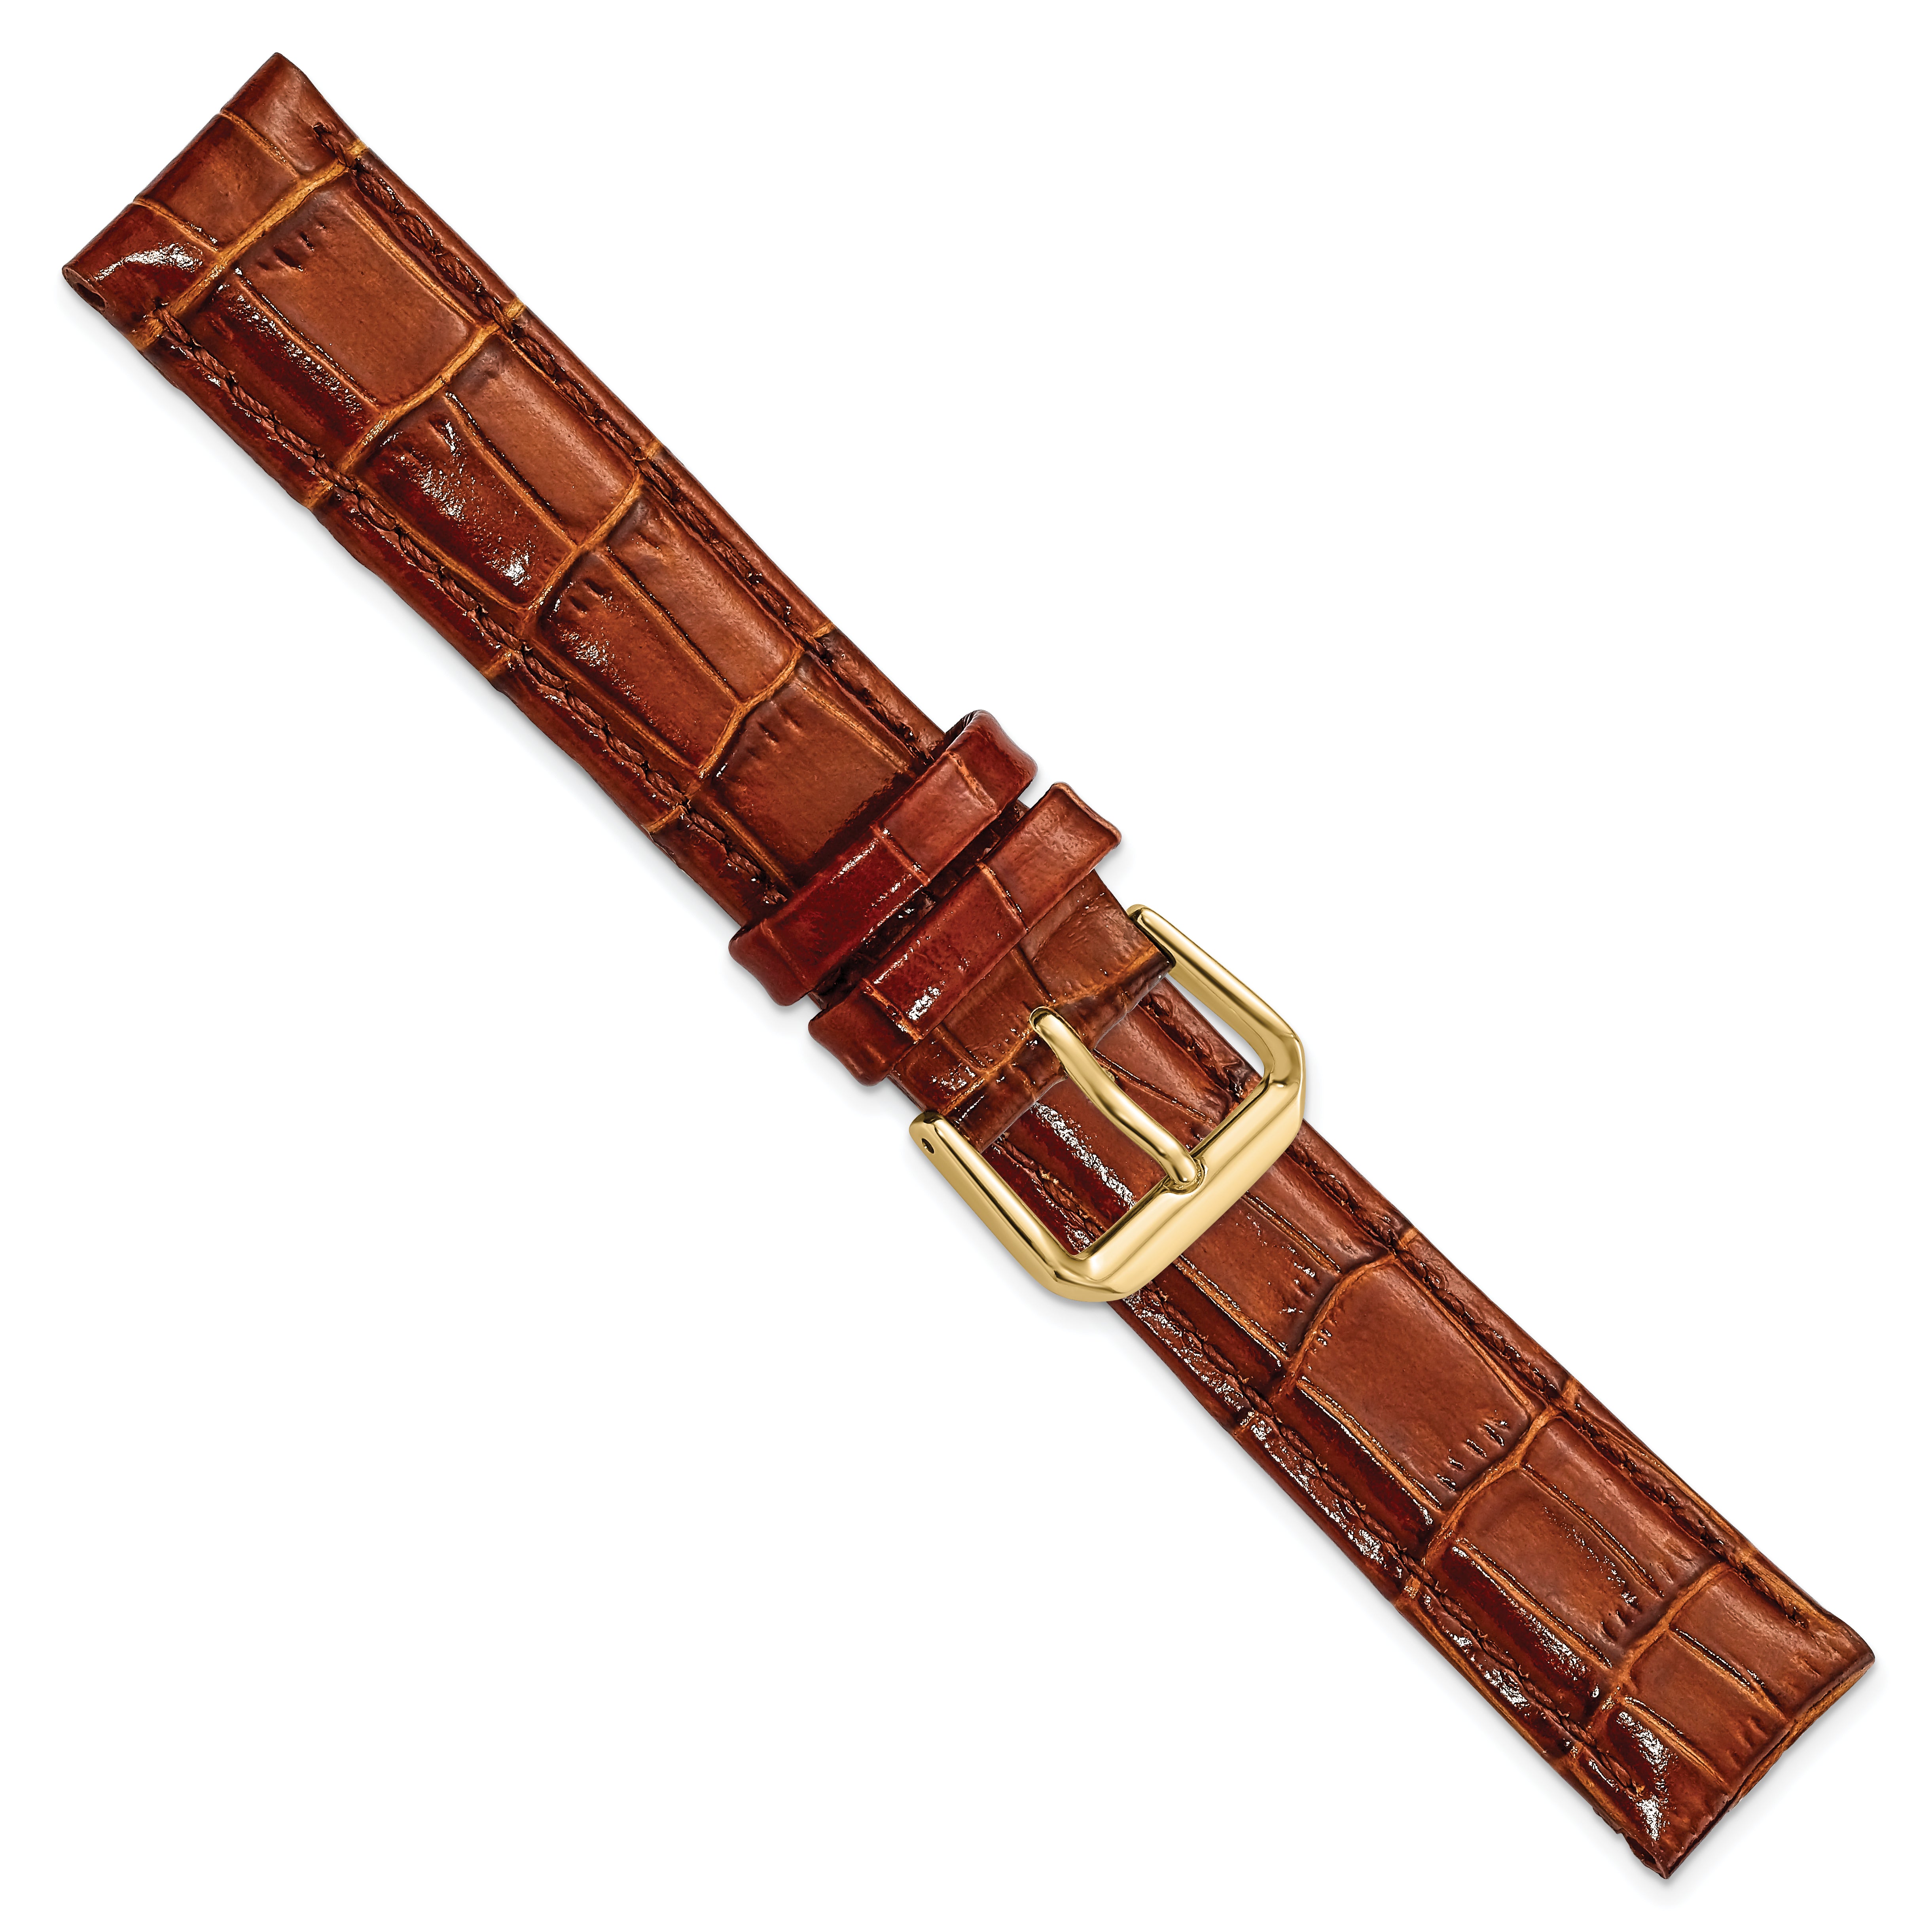 10mm Havana Crocodile Grain Leather with Dark Stitching and Gold-tone Buckle 6.75 inch Watch Band